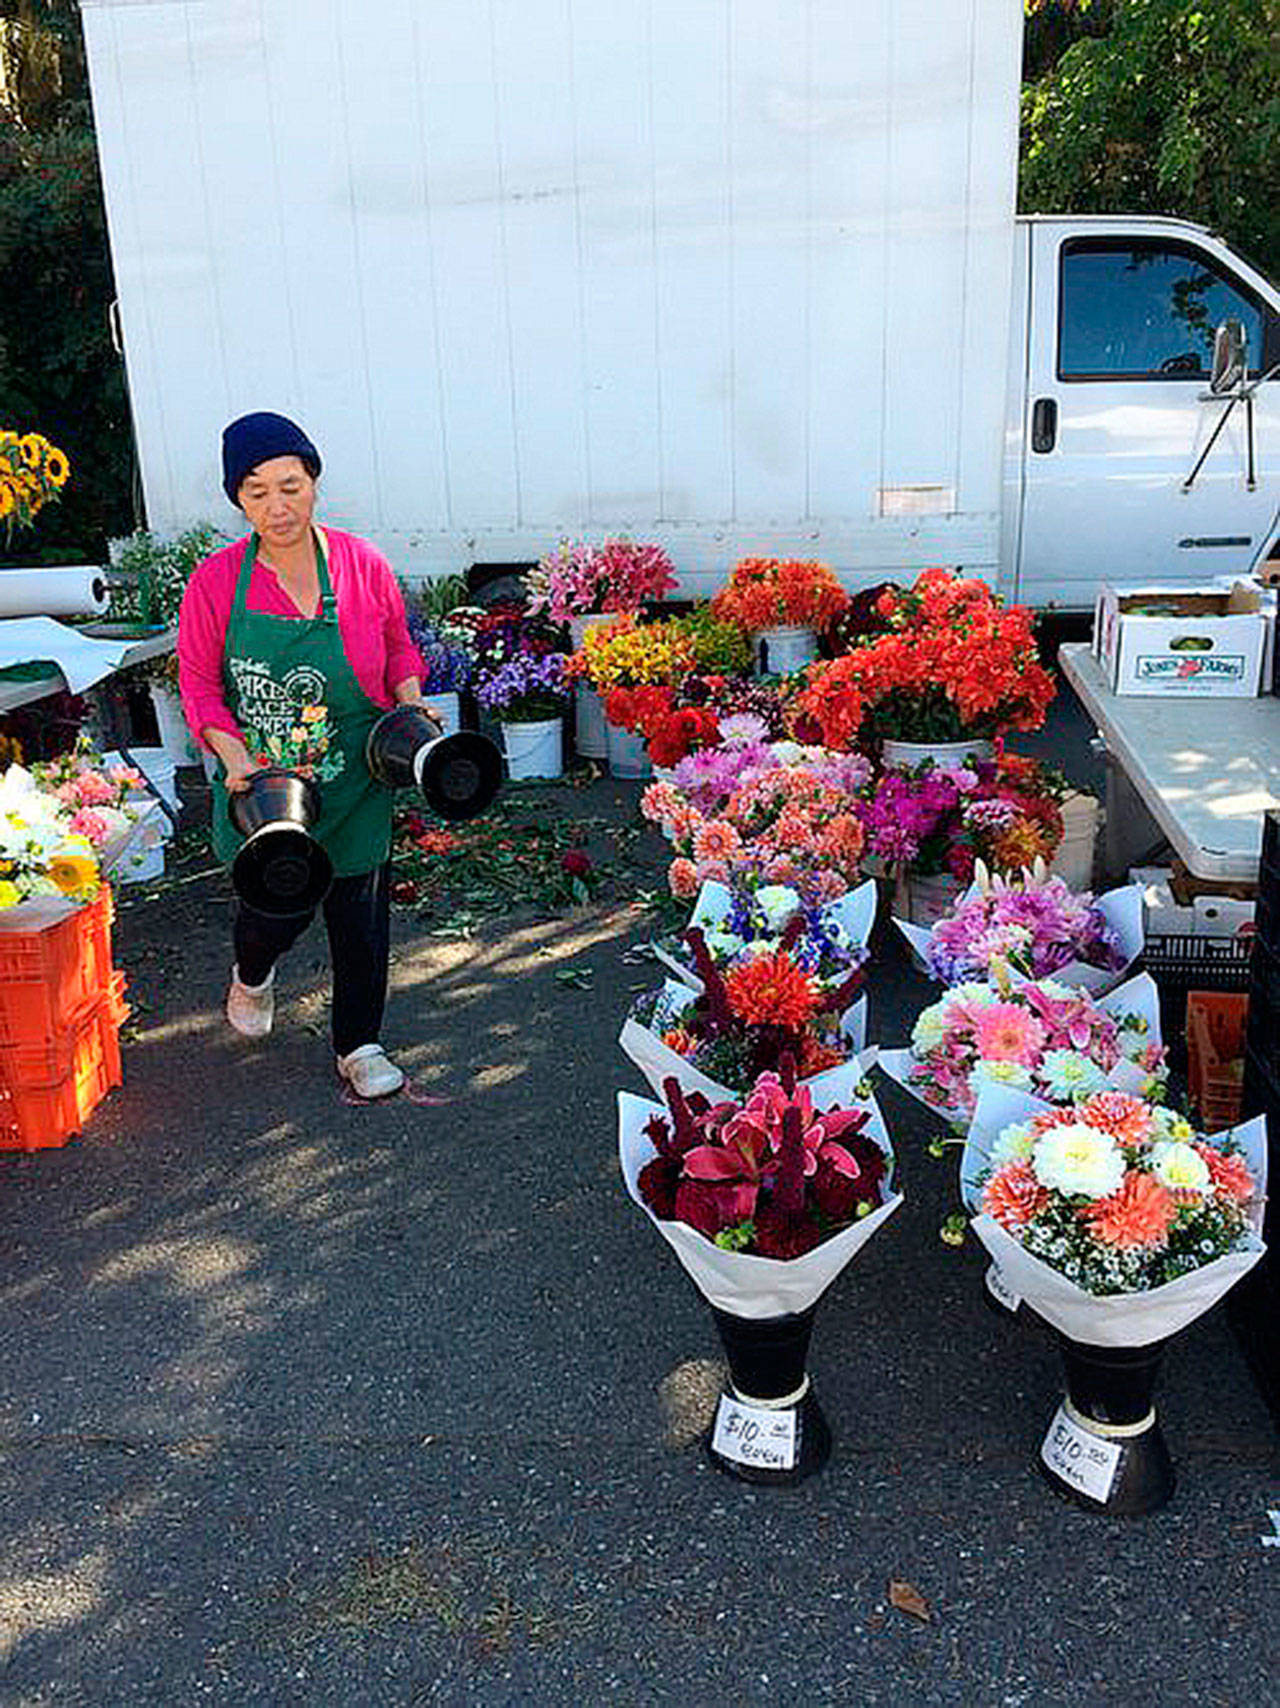 What’s a farmers market without flowers? Bellevue Farmers Market vendor Lee Lor & Garden sells beautiful flowers throughout the season. Photo courtesy of Bellevue Farmers Market